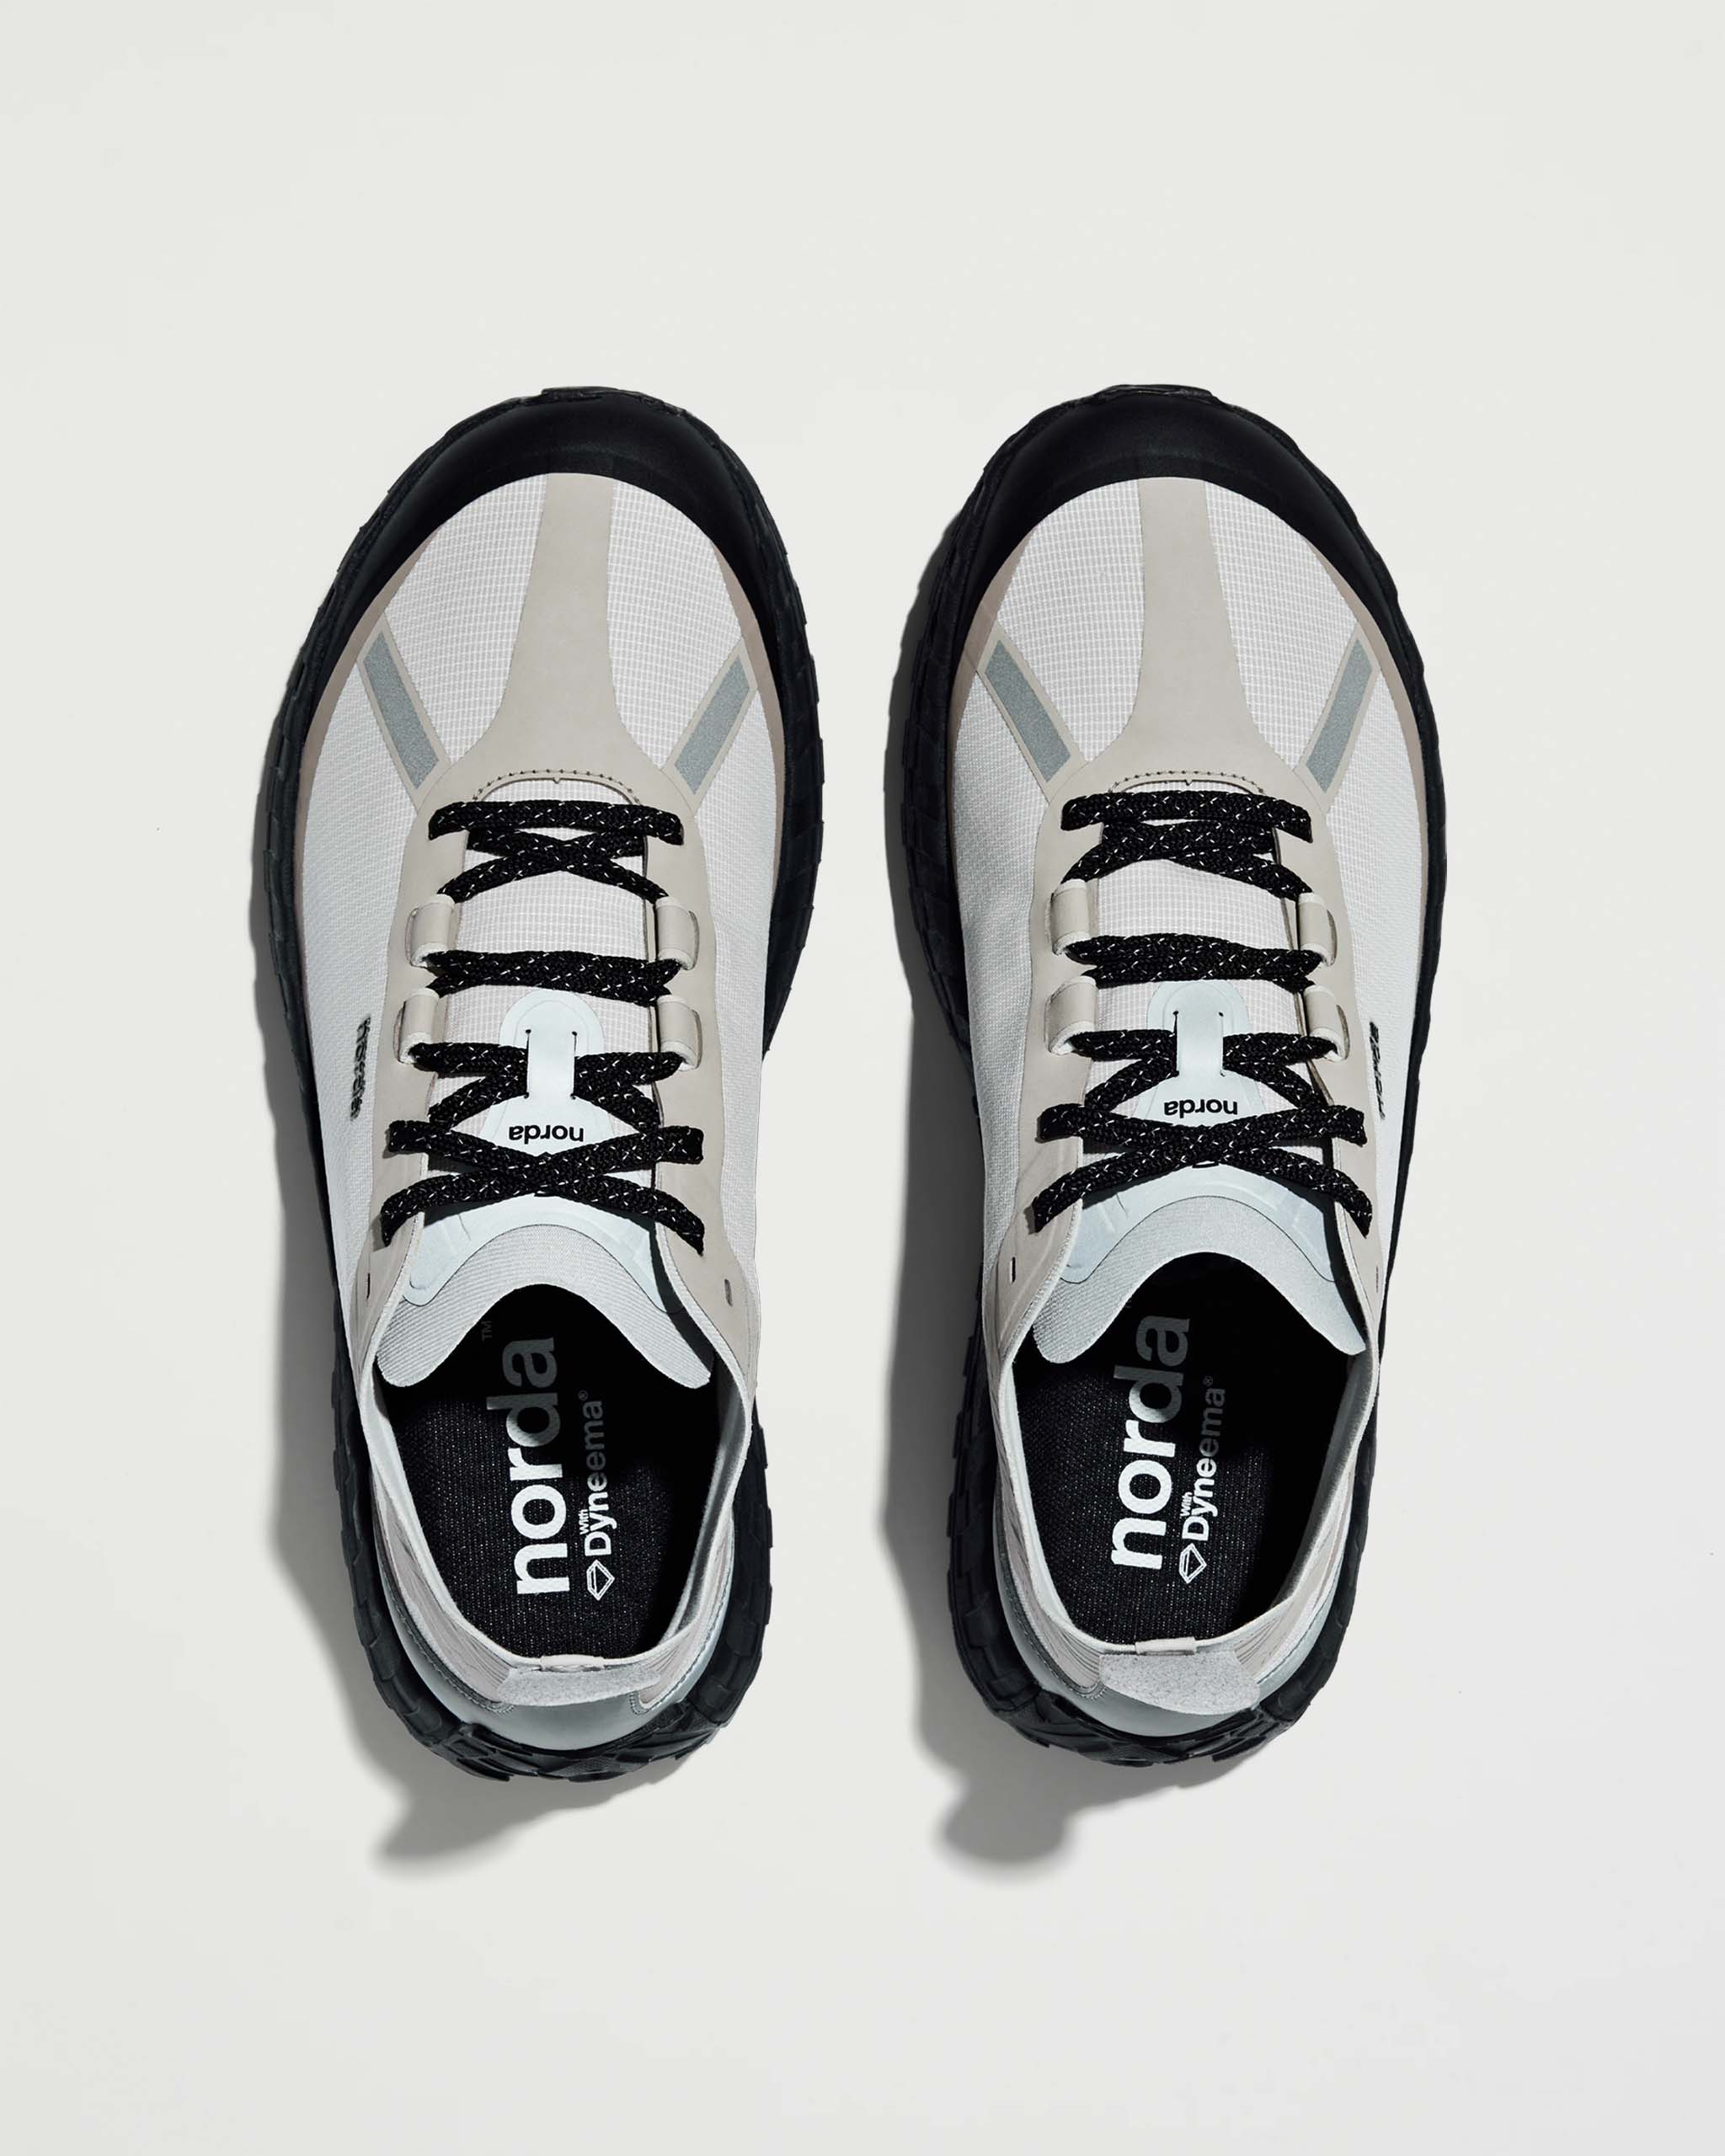 Norda Run 001 Cinder Shoes Sneakers Men